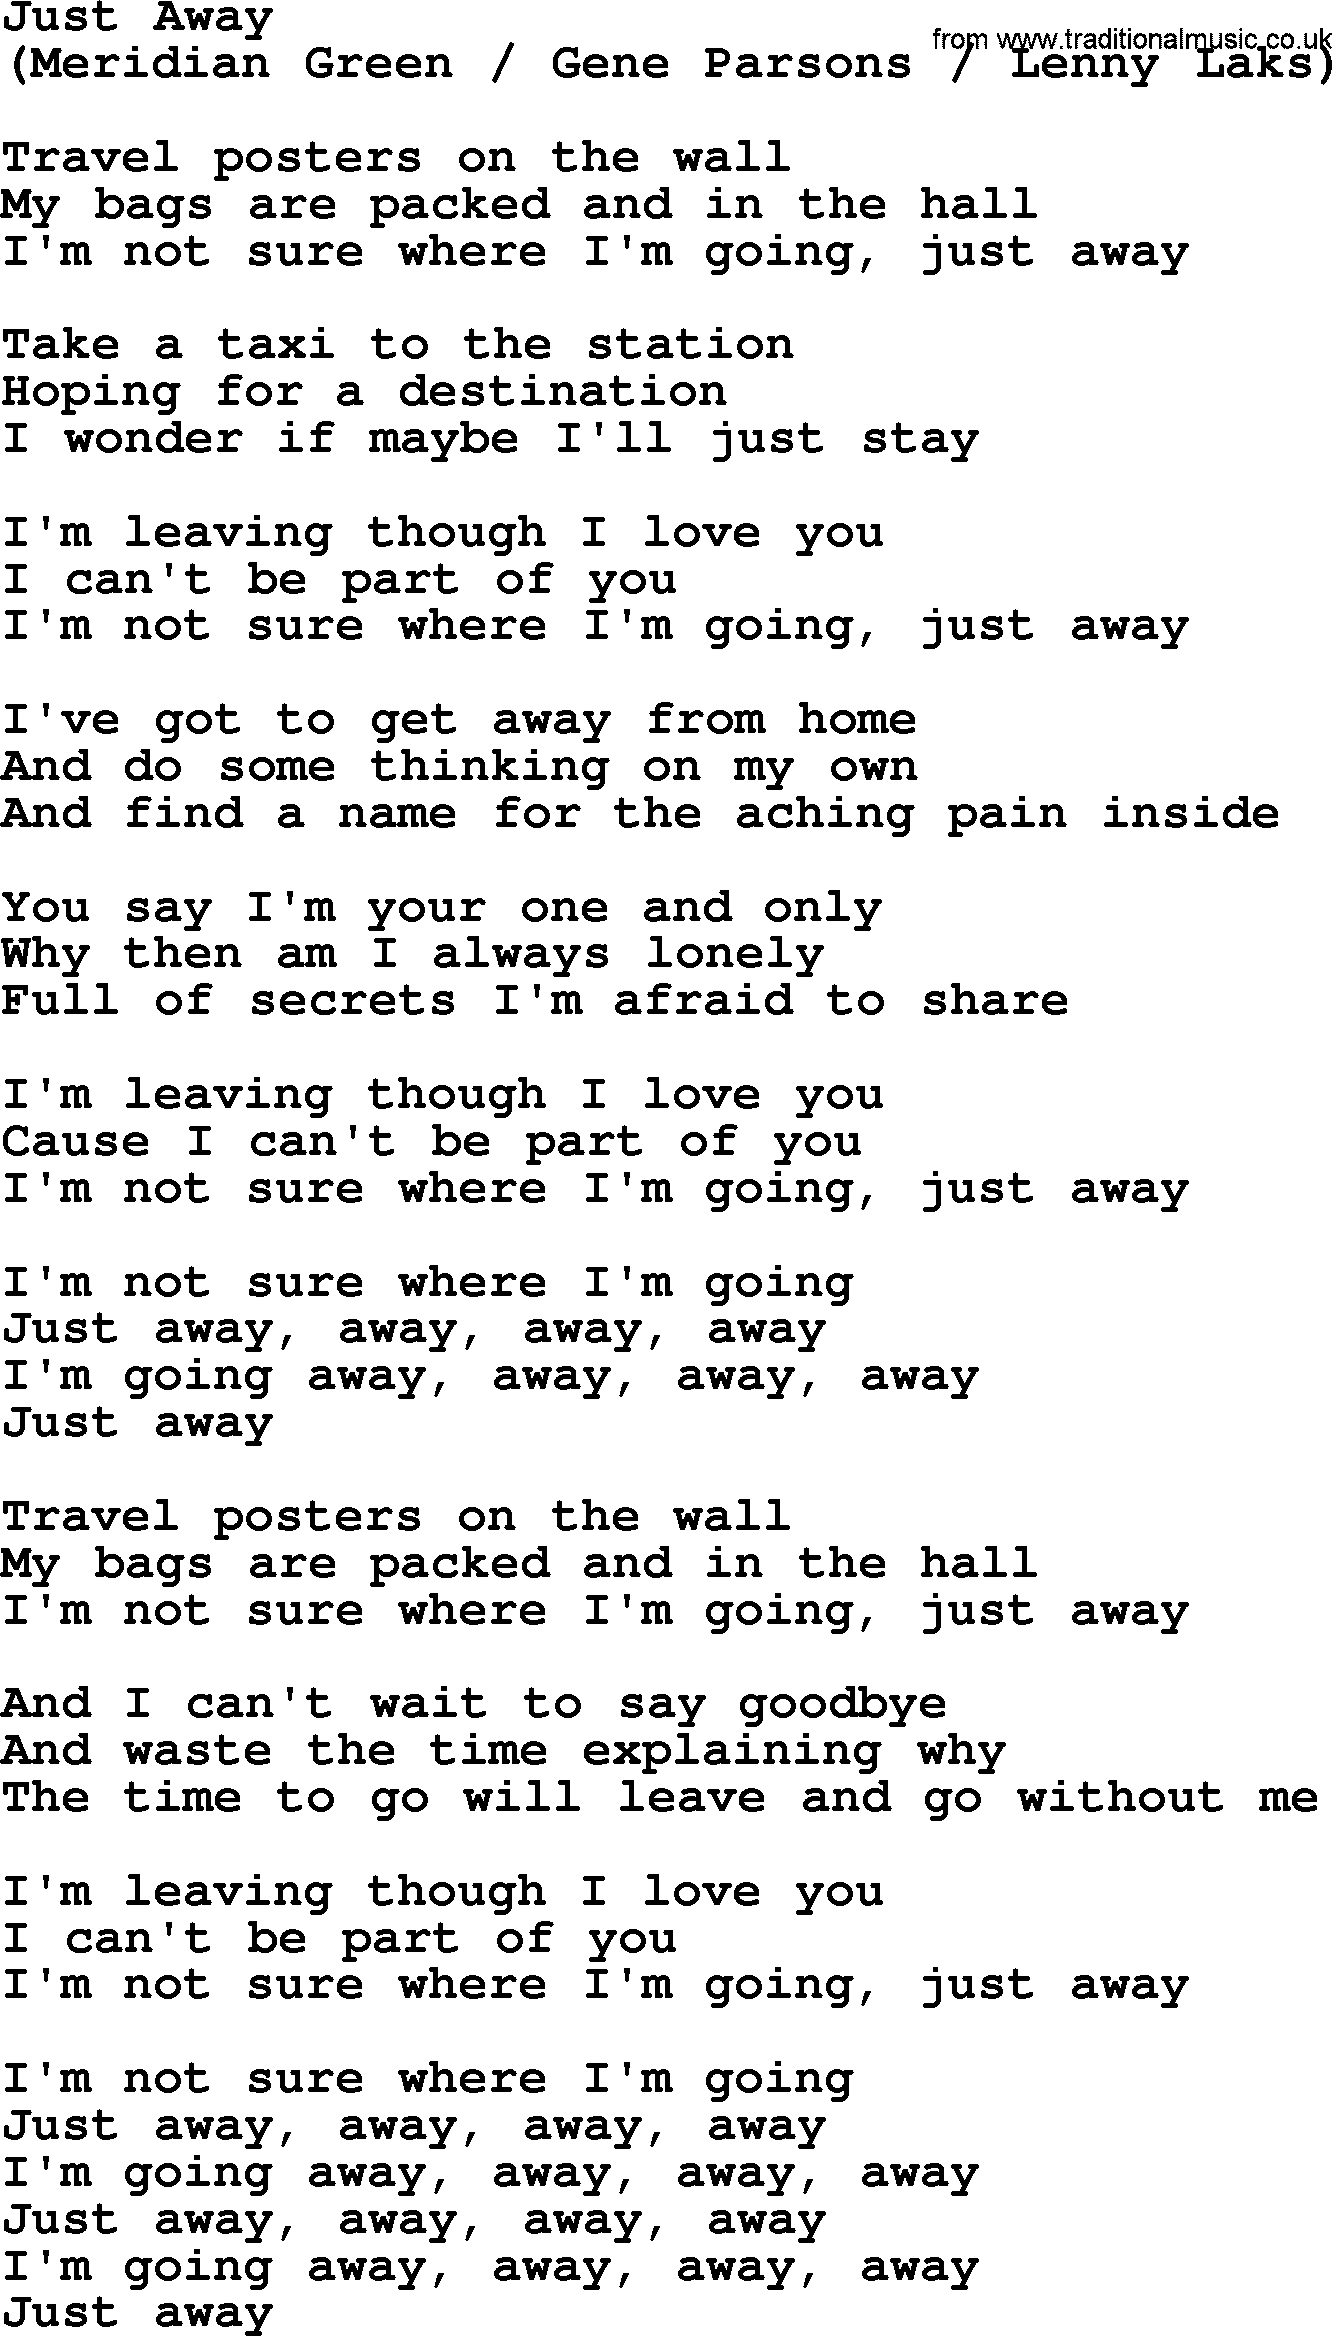 The Byrds song Just Away, lyrics